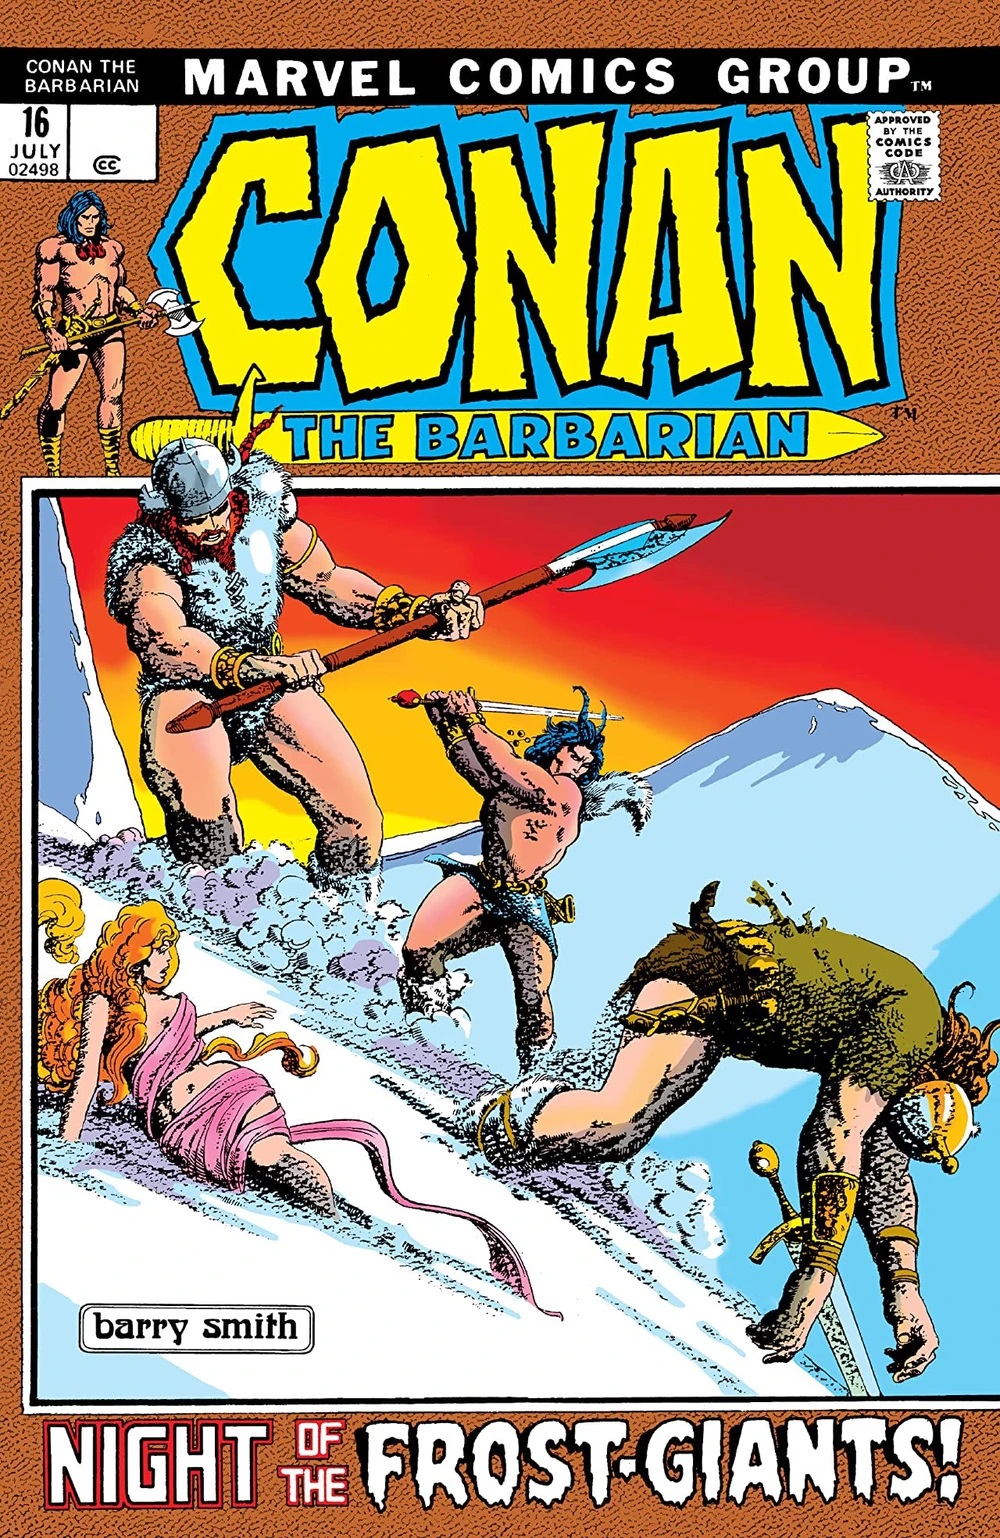 Conan The Barbarian Volume 1 #16